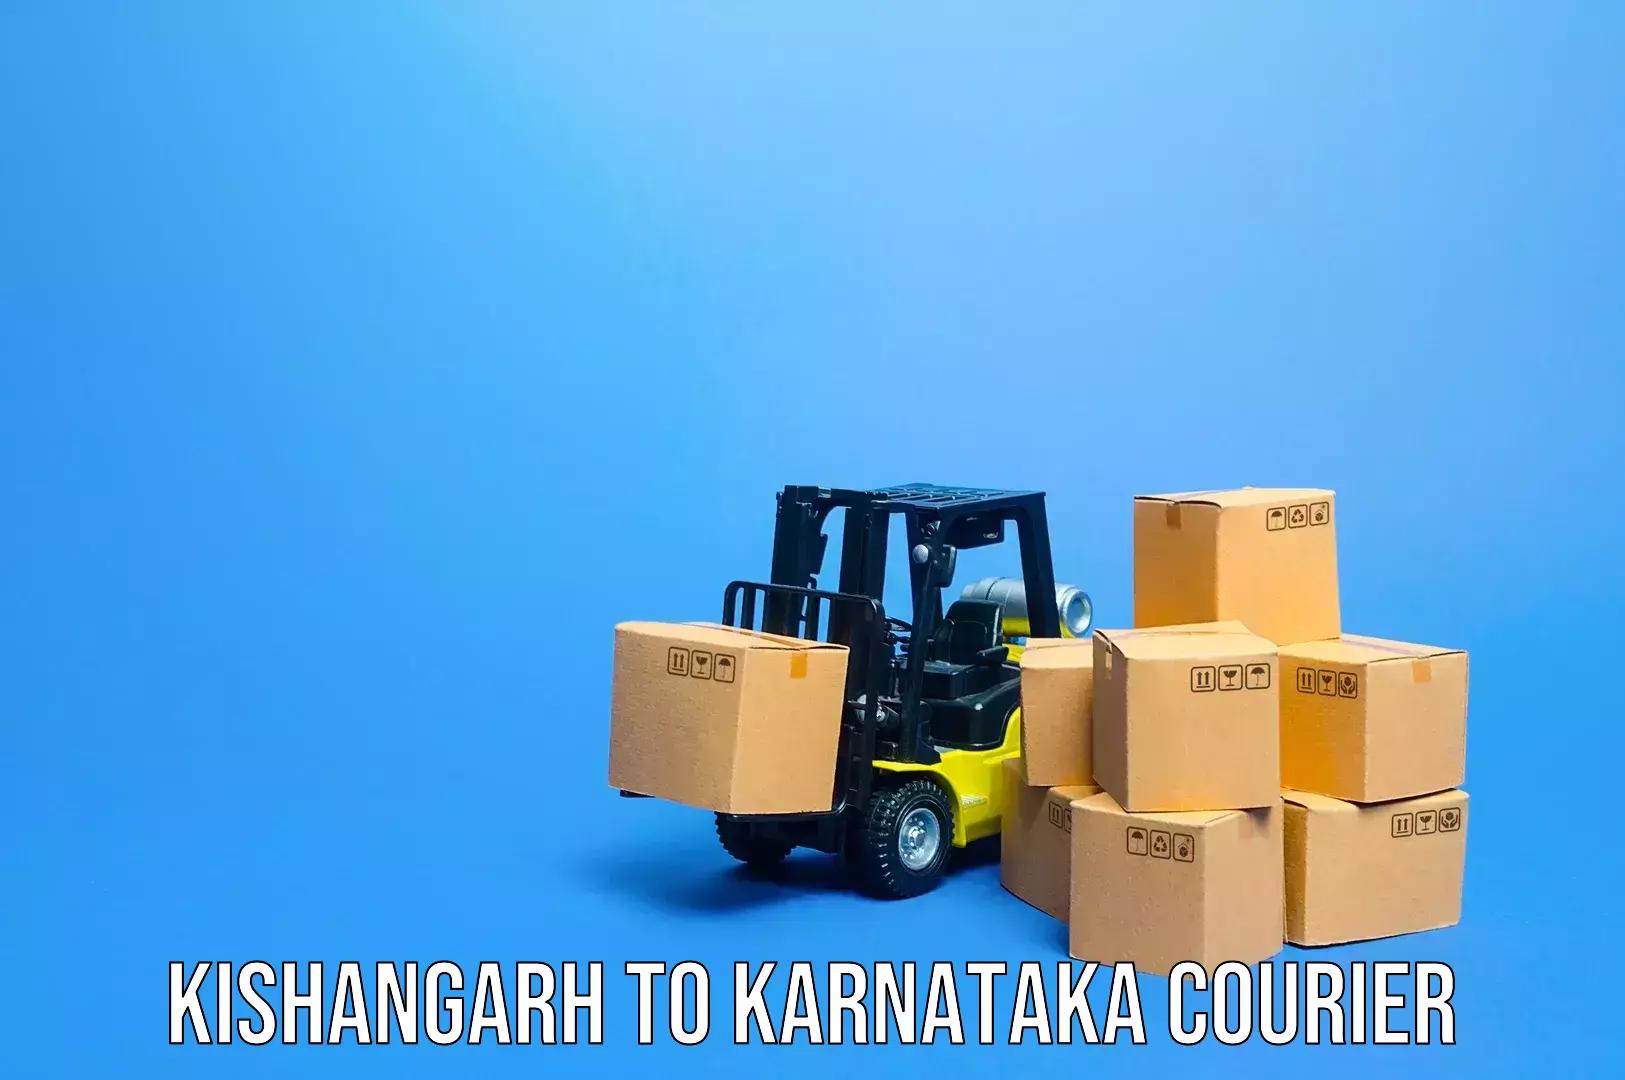 Luggage delivery app Kishangarh to Rona Gadag